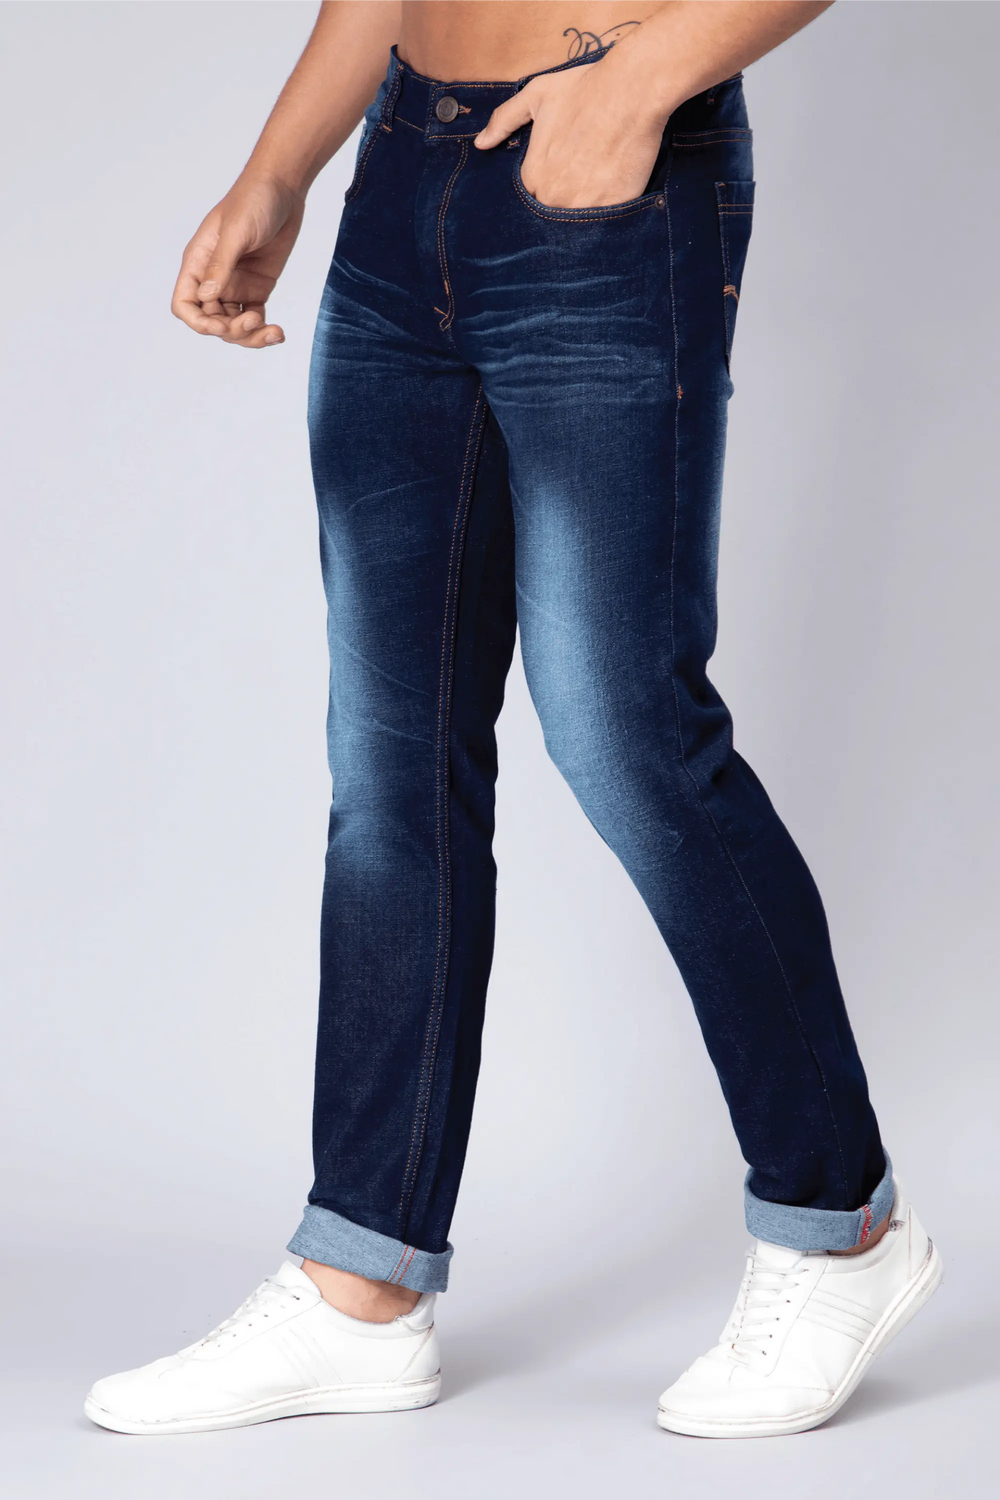 Slim Fit Shady Dark Blue Stretchable Denim Jeans For Men - Peplos Jeans 